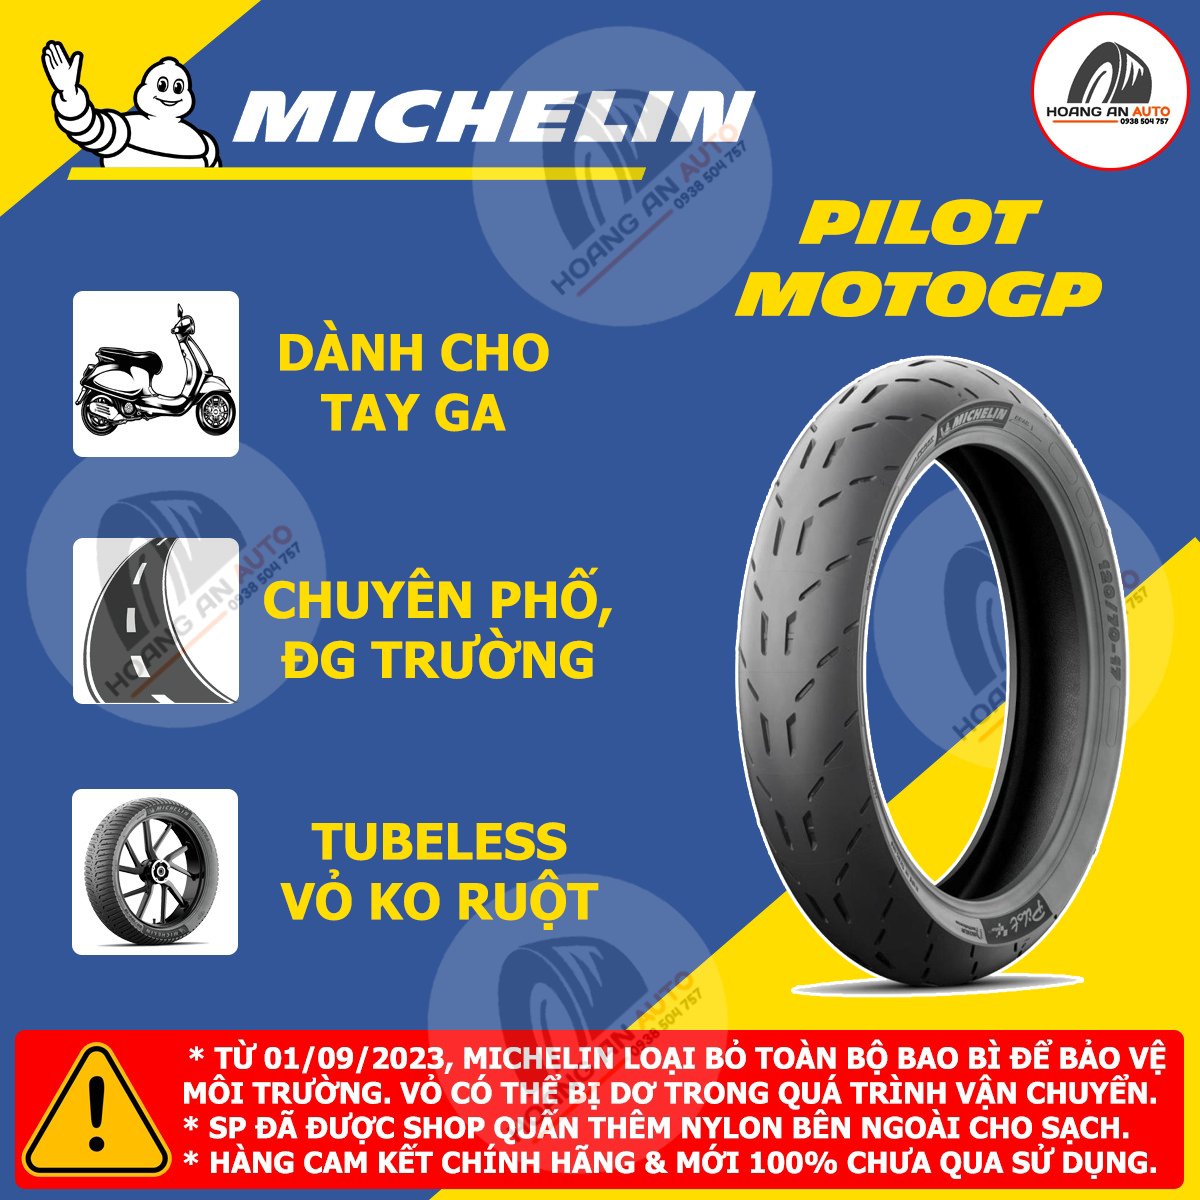 Vỏ lốp xe Michelin Pilot Motogp dành cho xe tay ga Vario 150, Airblade 150